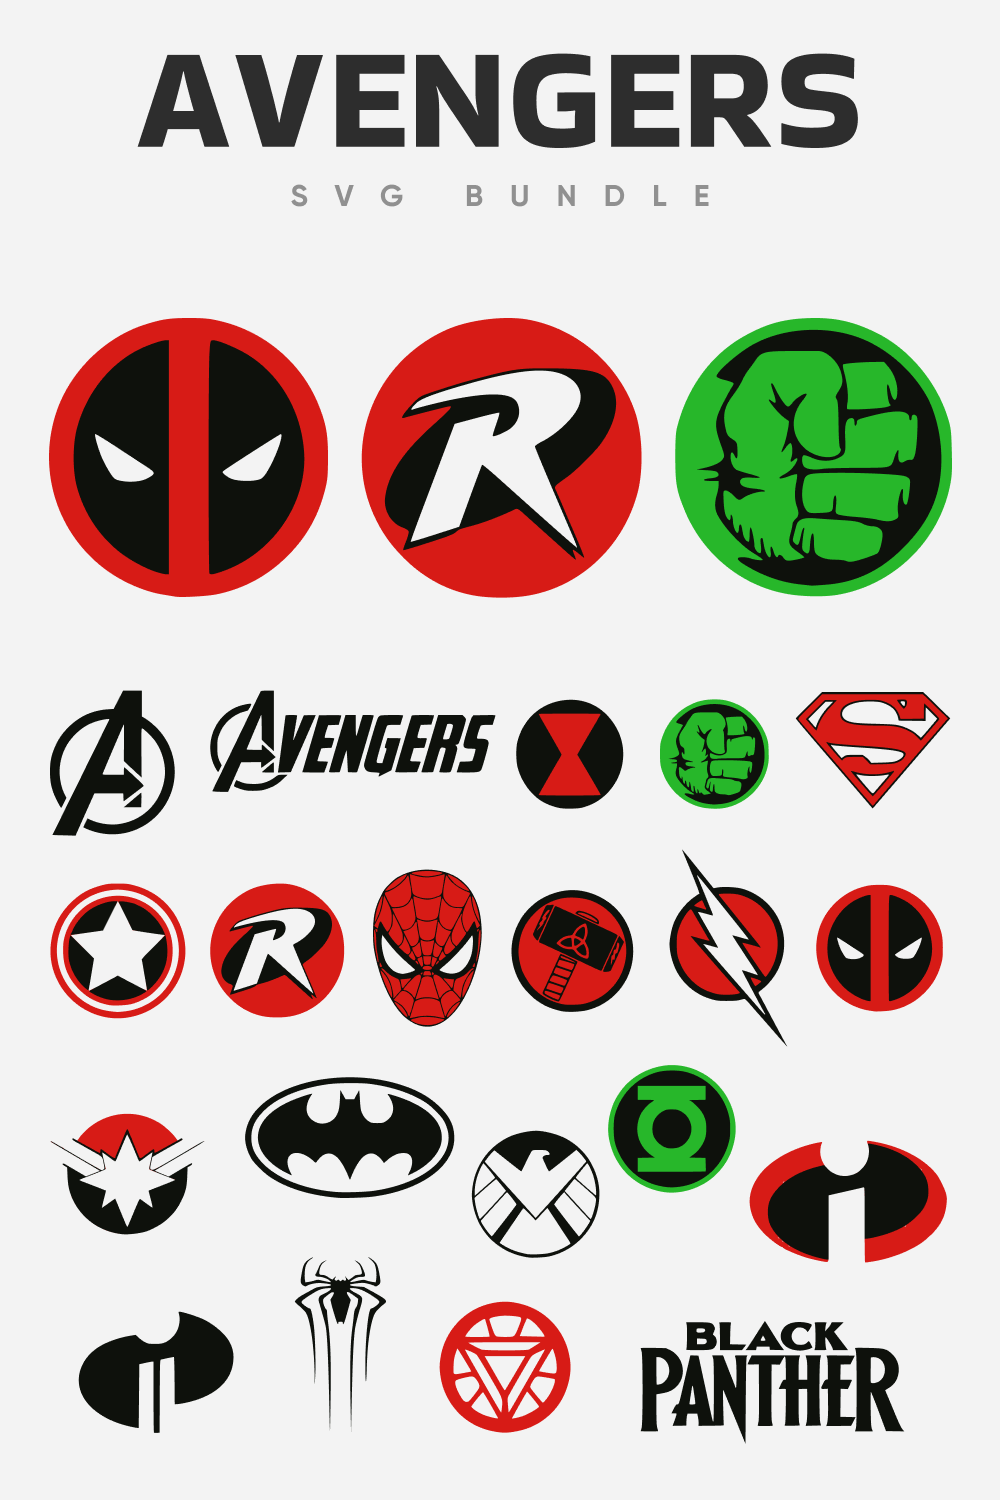 Avengers SVG bundle avengers.